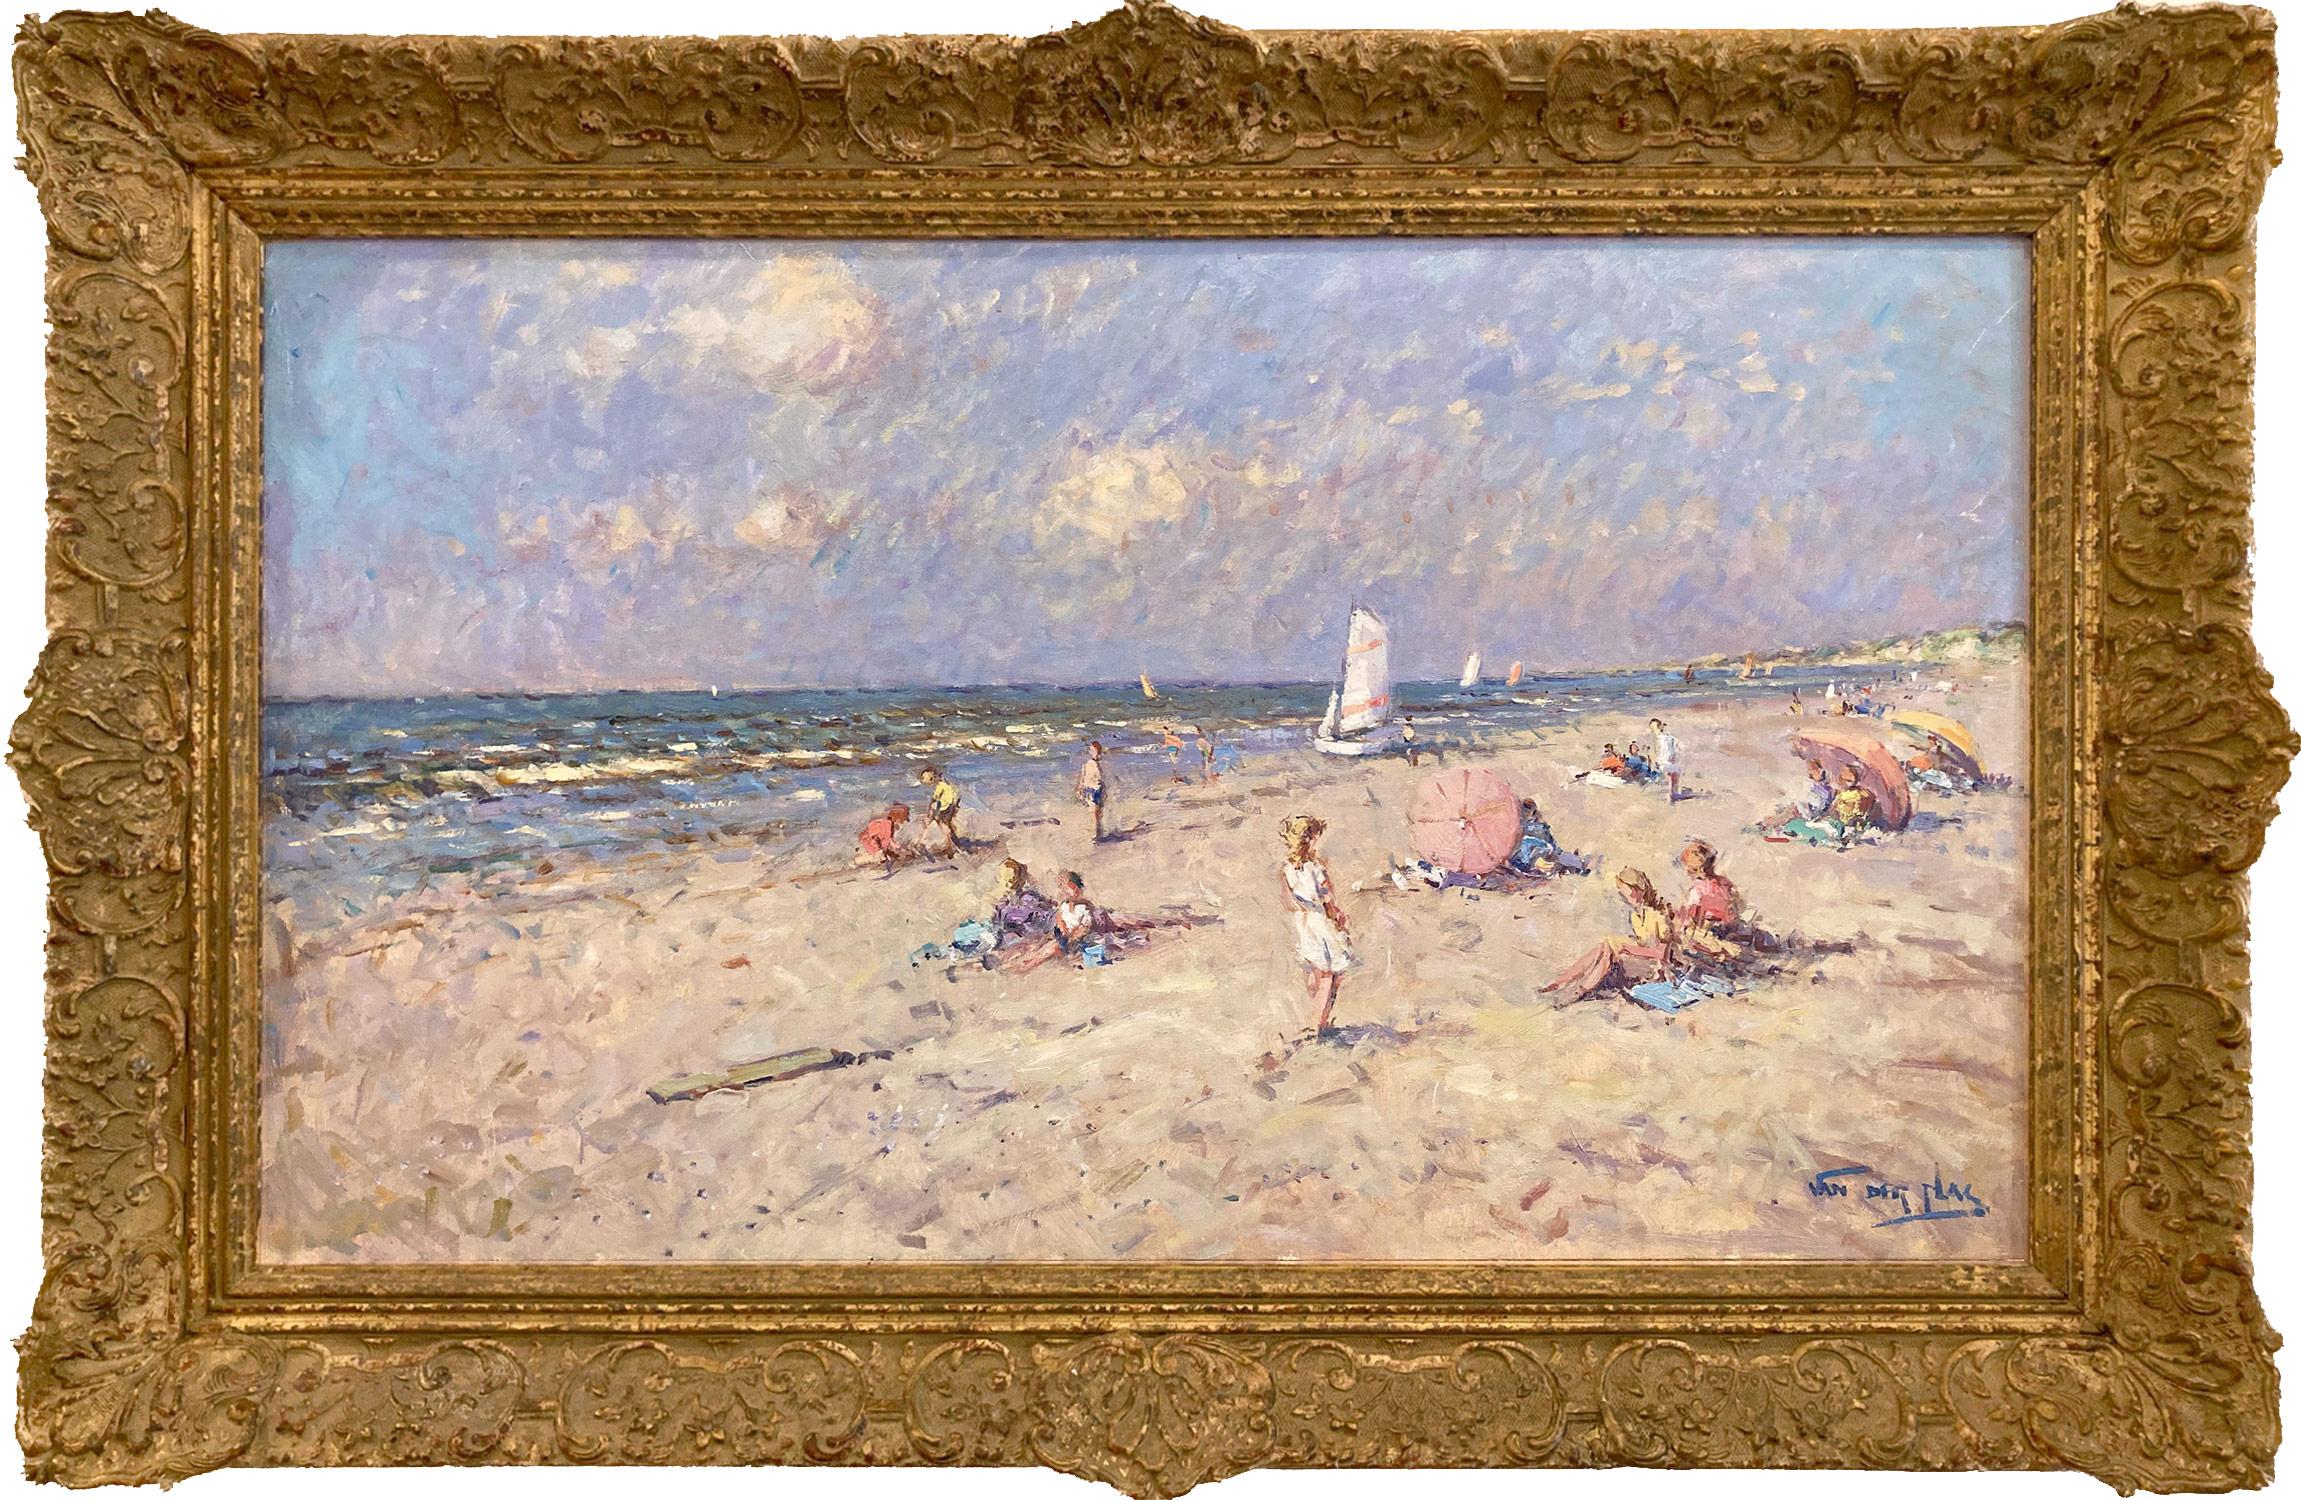 Niek van der Plas Figurative Painting - "Beach Scene with Figures & Sailing Boats" Impressionist Oil Painting Landscape